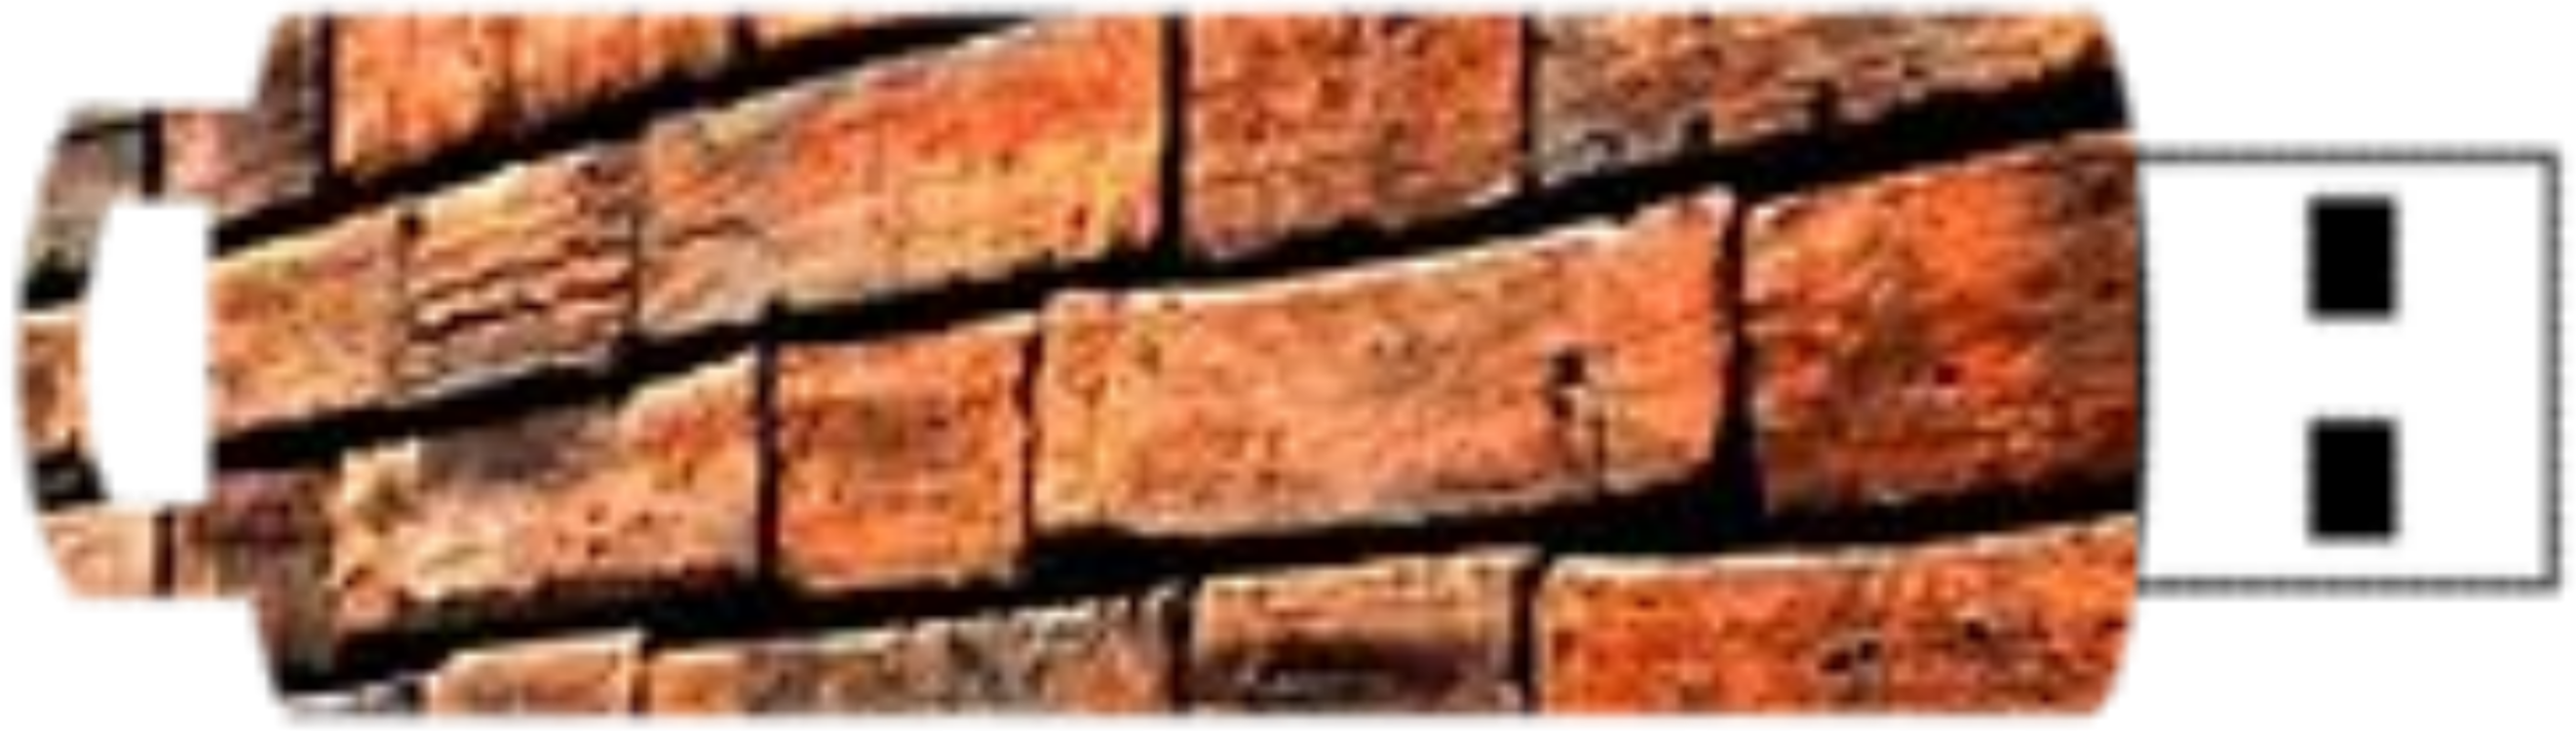 Brickwork,Wall,Text